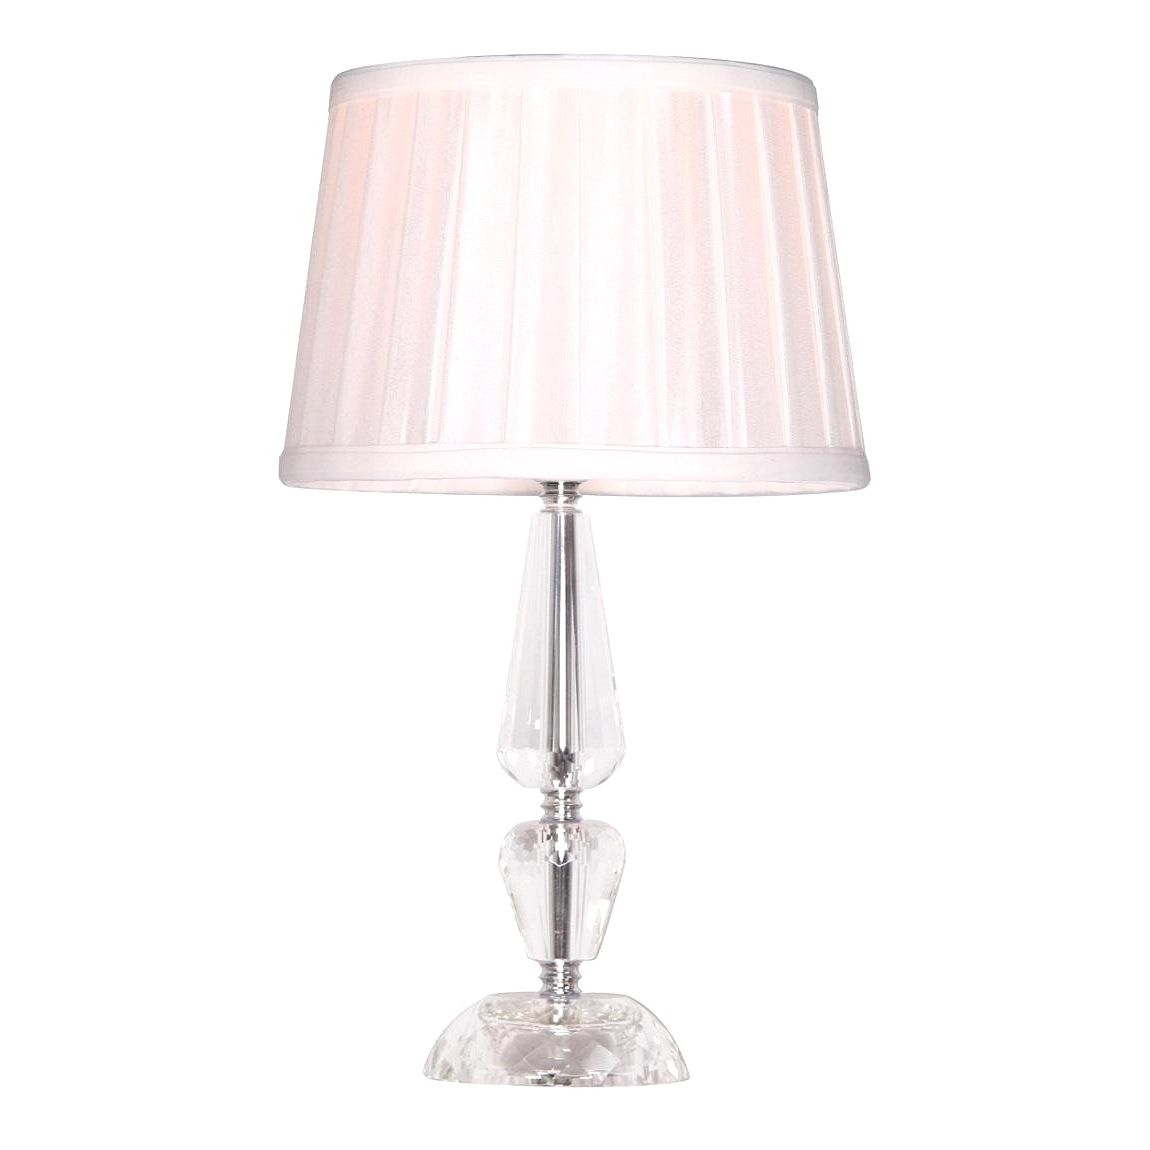 Gallery Debenhams Table Lamps – Badotcom Throughout Most Current Debenhams Table Lamps For Living Room (View 10 of 20)